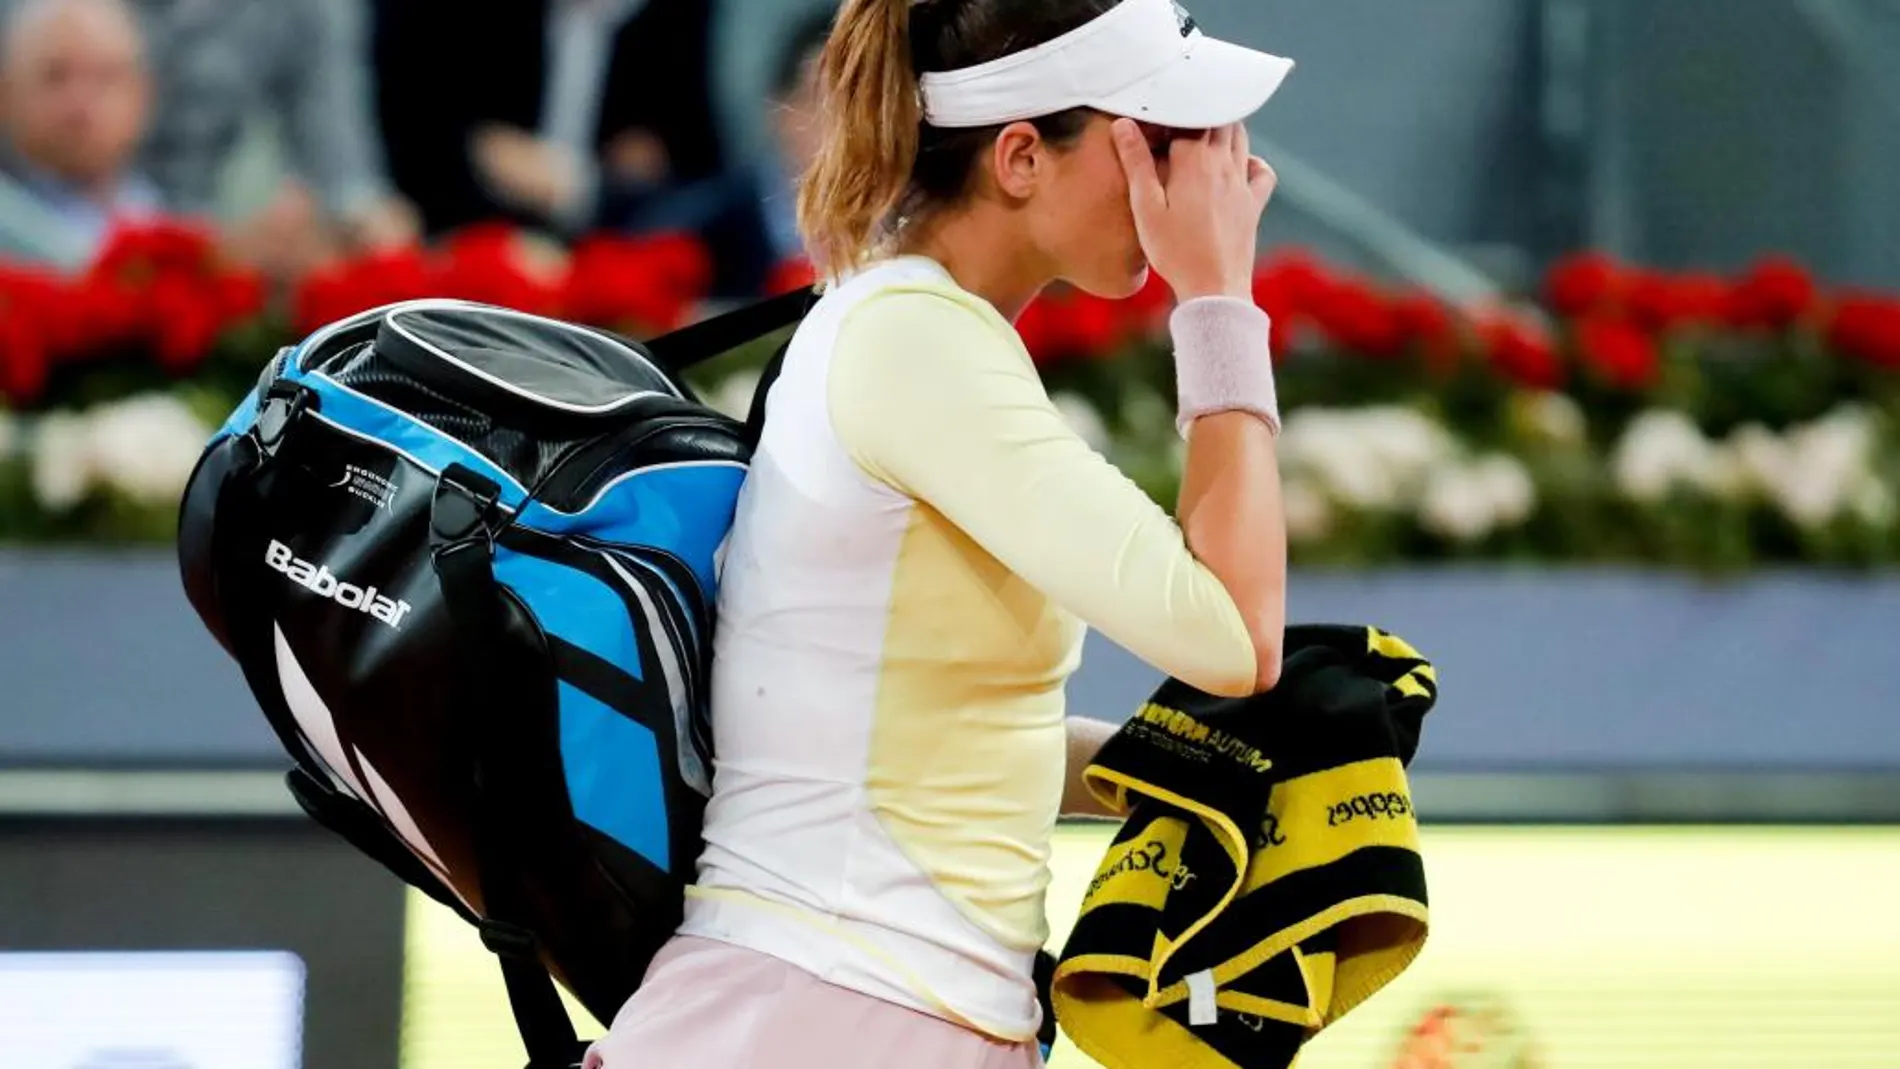 La tenista española Garbiñe Muguruza abandona el terreno de juego tras ser derrotada por la rumana Irina-Camelia Begu